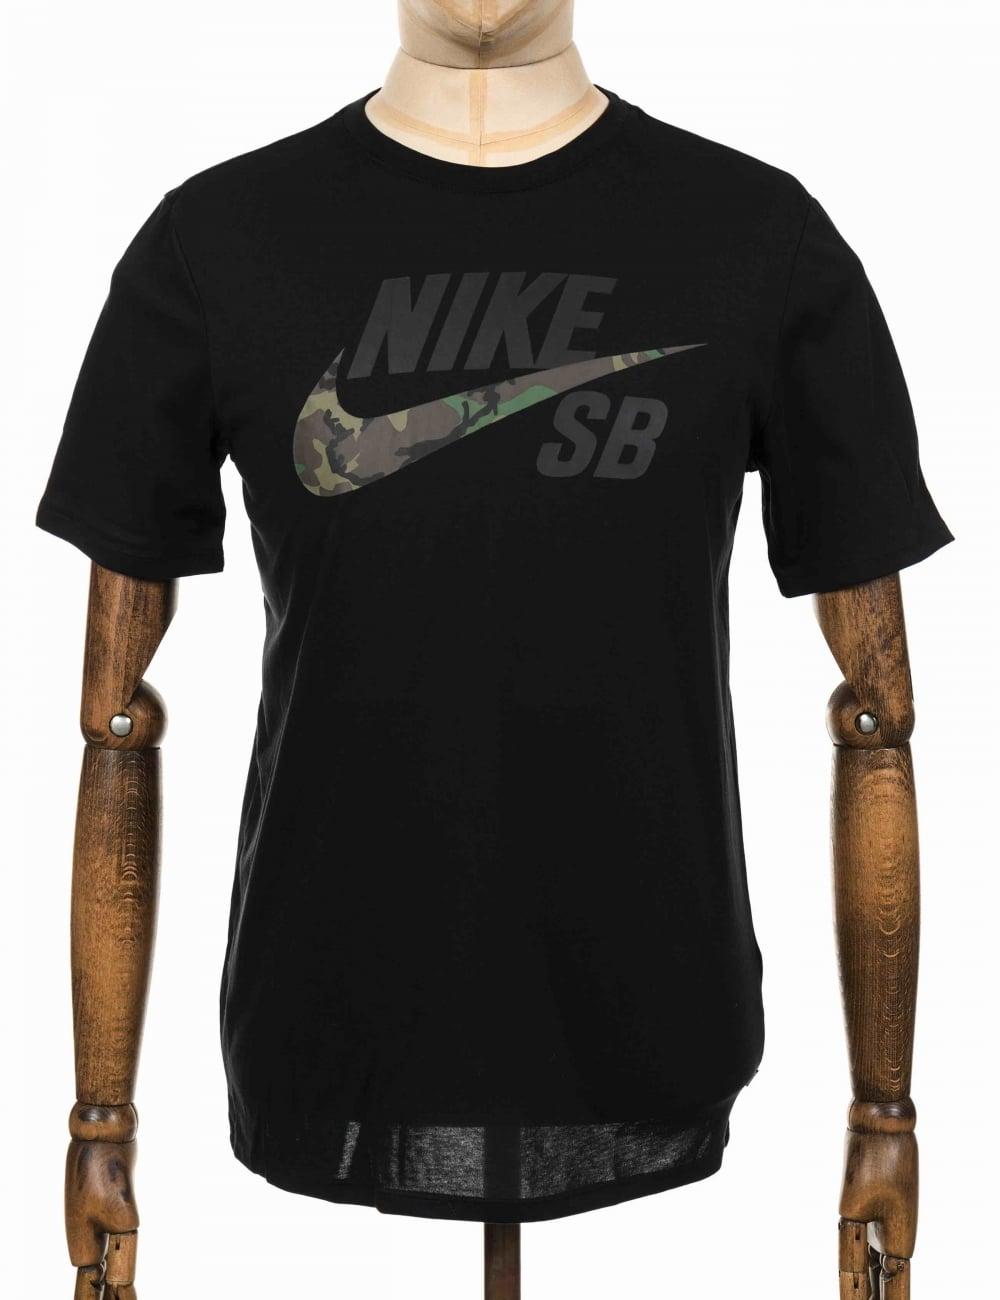 Nike SB Camo Logo - Nike SB Dri-Fit Tee - Black/Camo - T Shirts from Fat Buddha Store UK